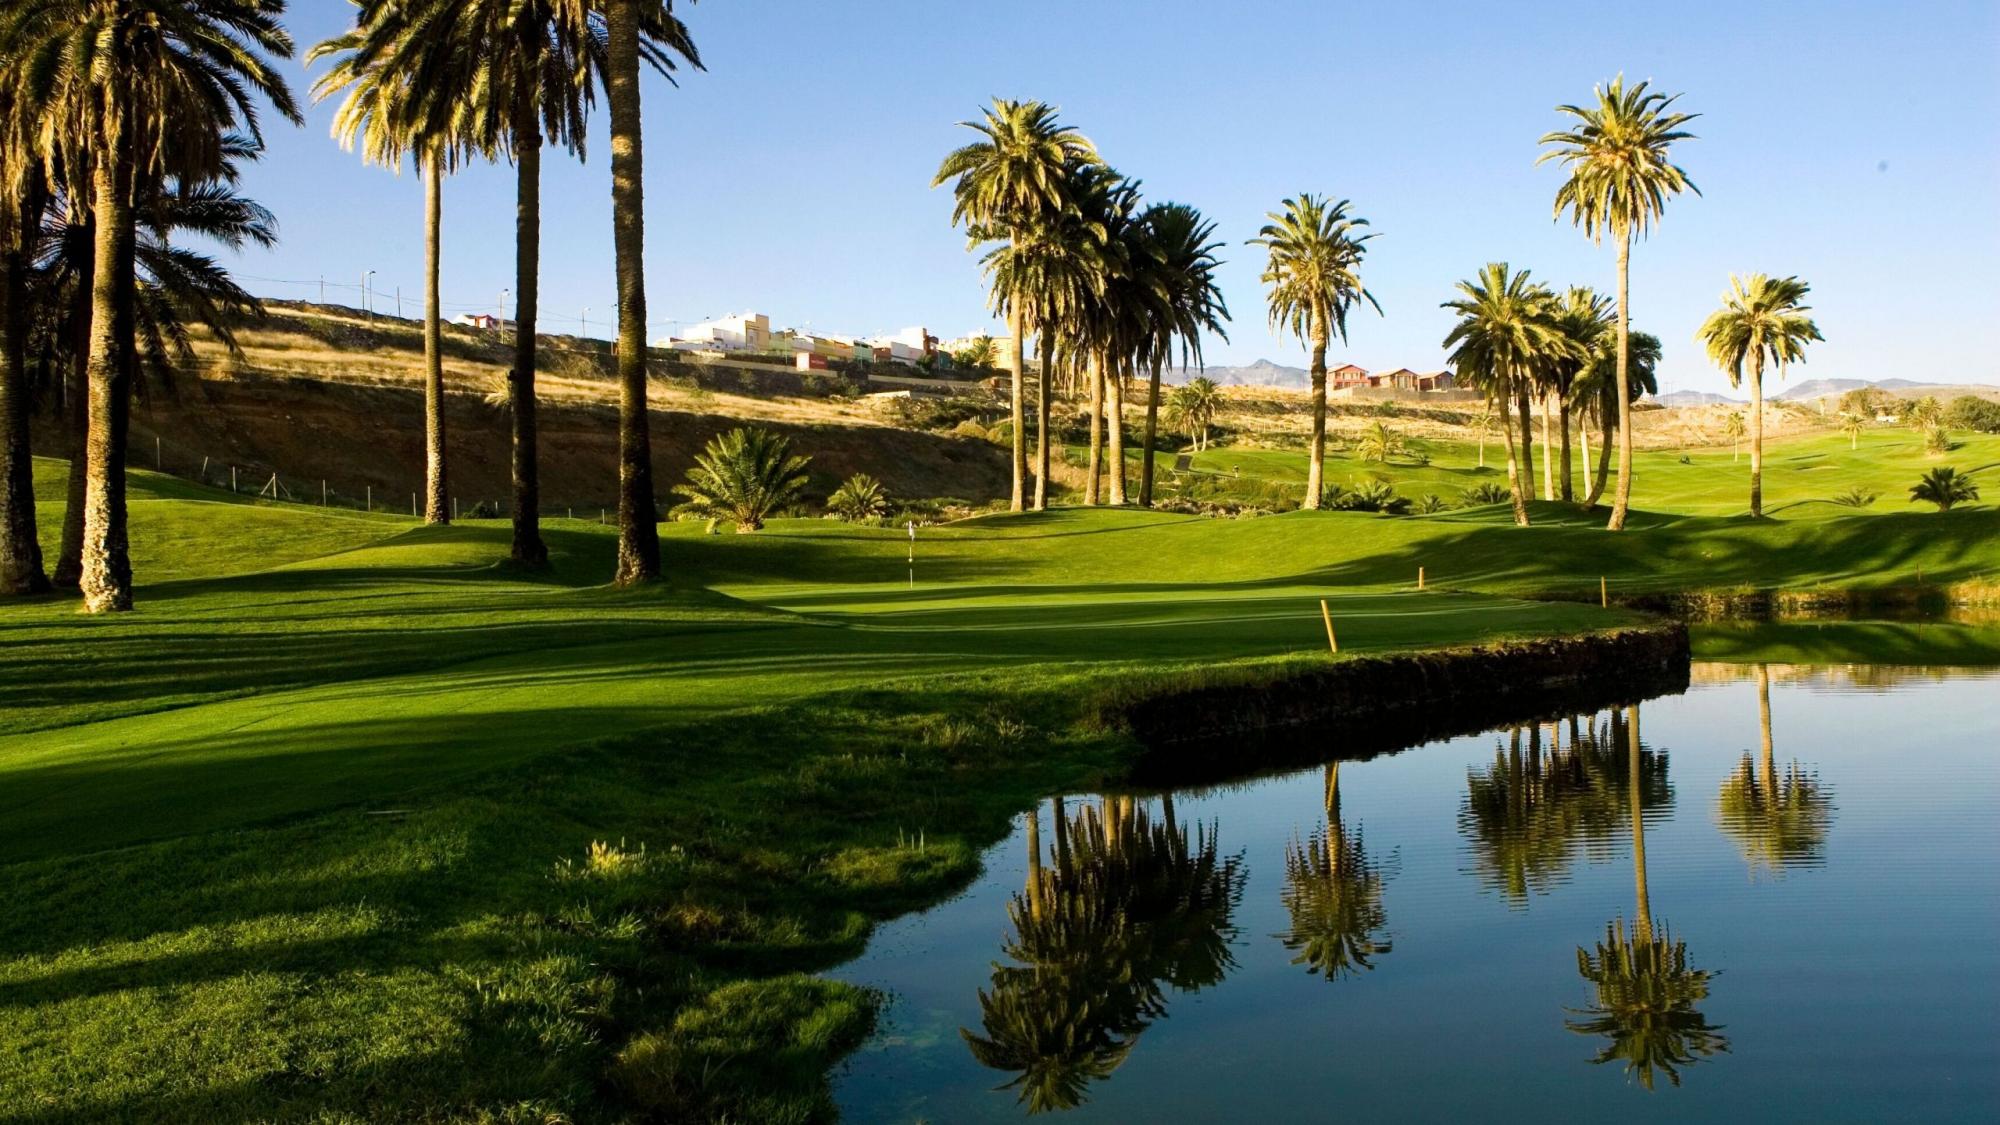 View El Cortijo Golf Club's lovely golf course in astounding Gran Canaria.